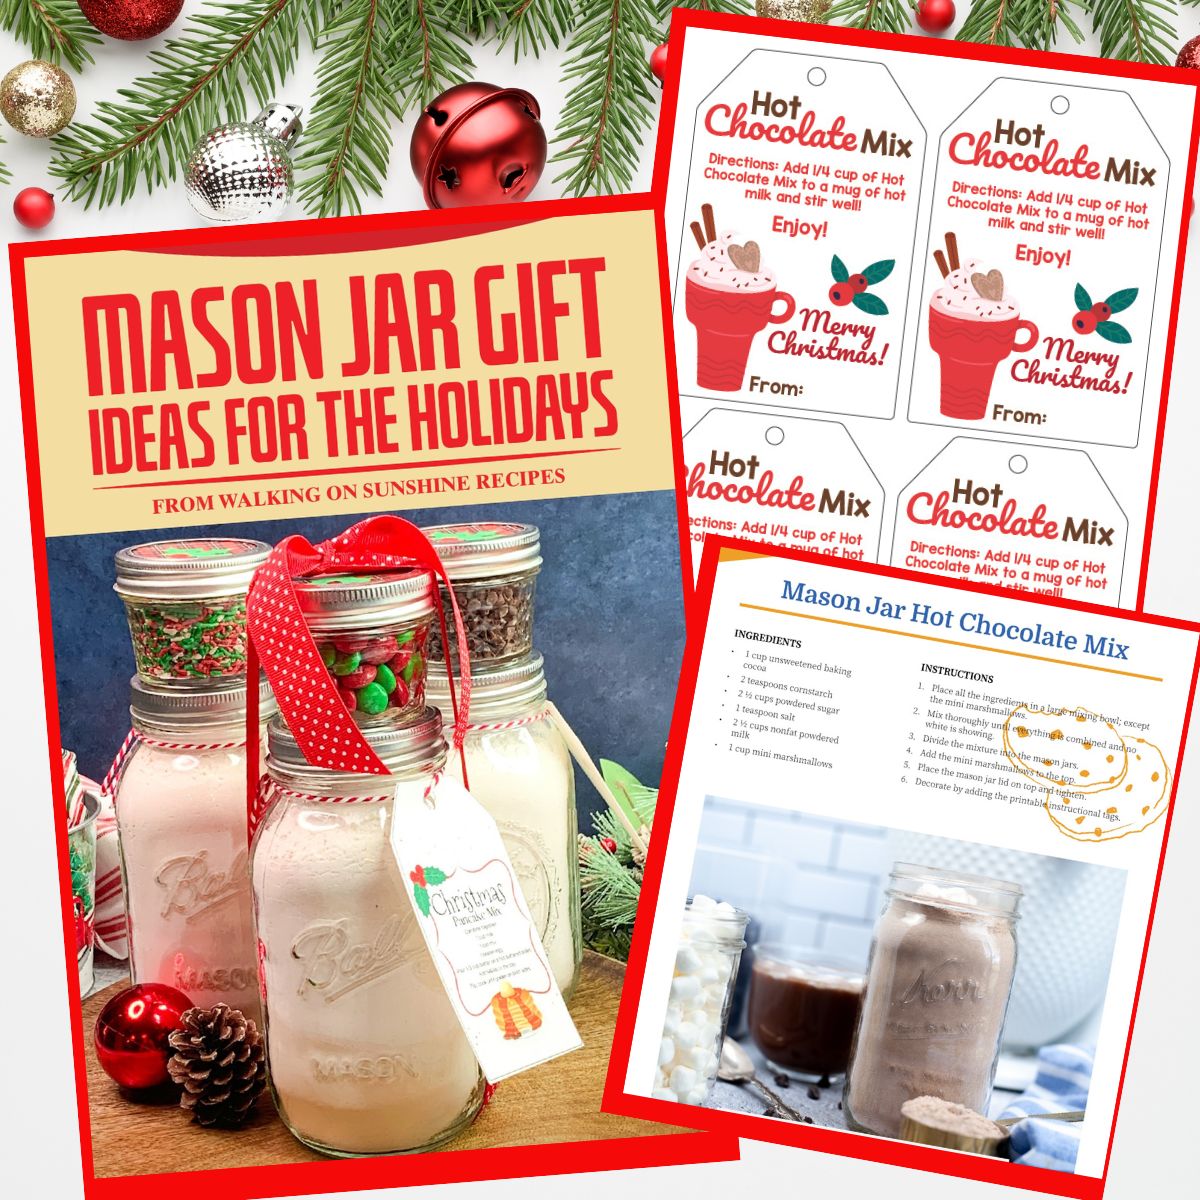 Mason Jar Gift Ideas Ebook promo.